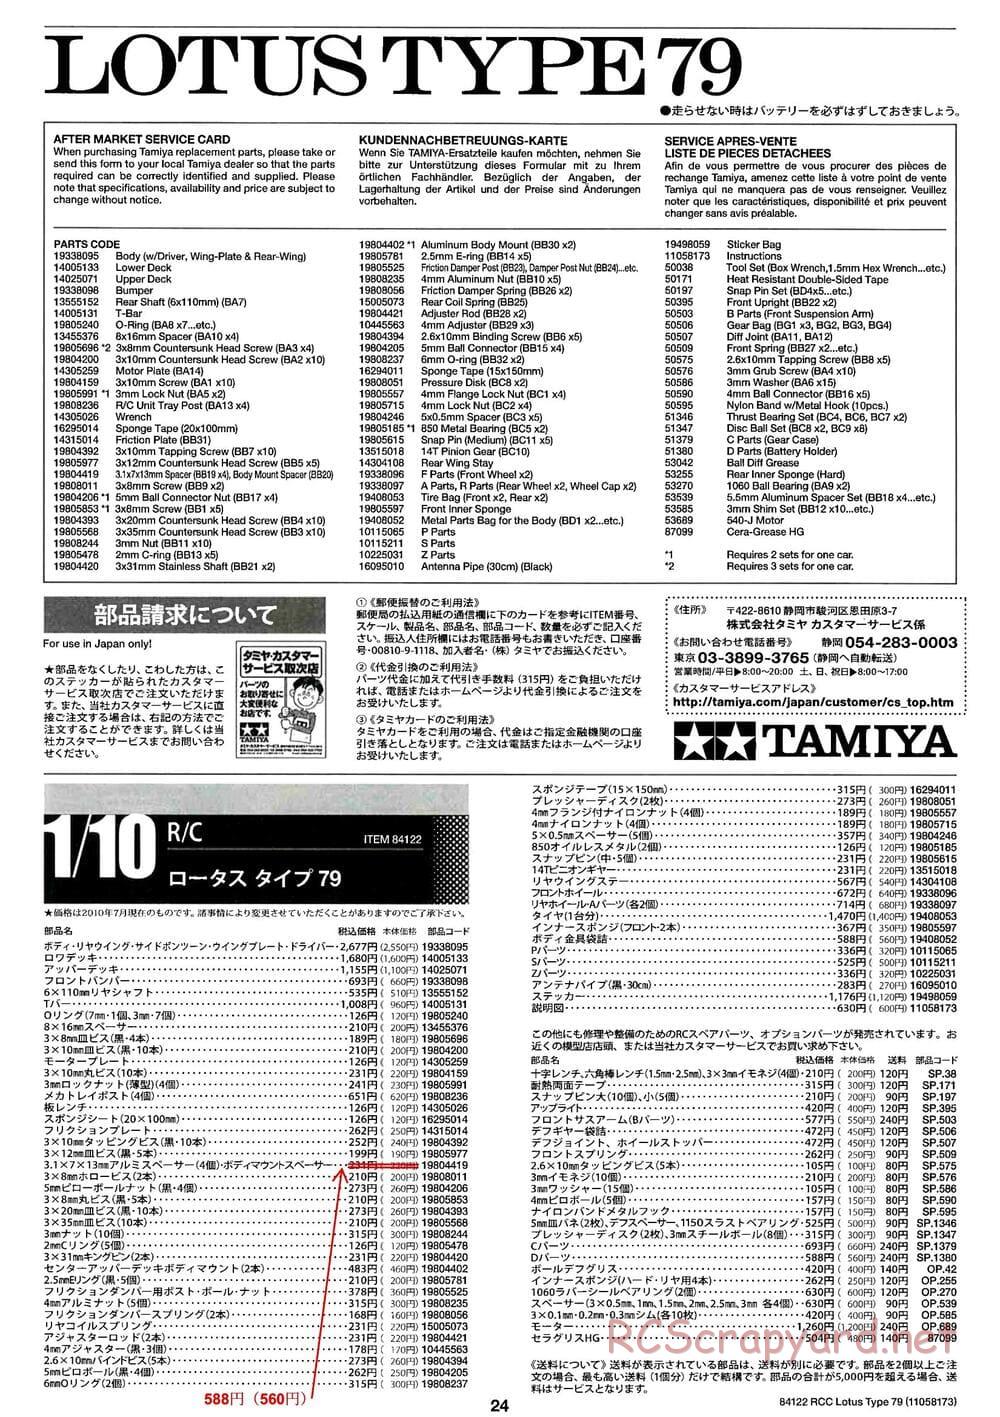 Tamiya - Lotus Type 79 - F104W Chassis - Manual - Page 24